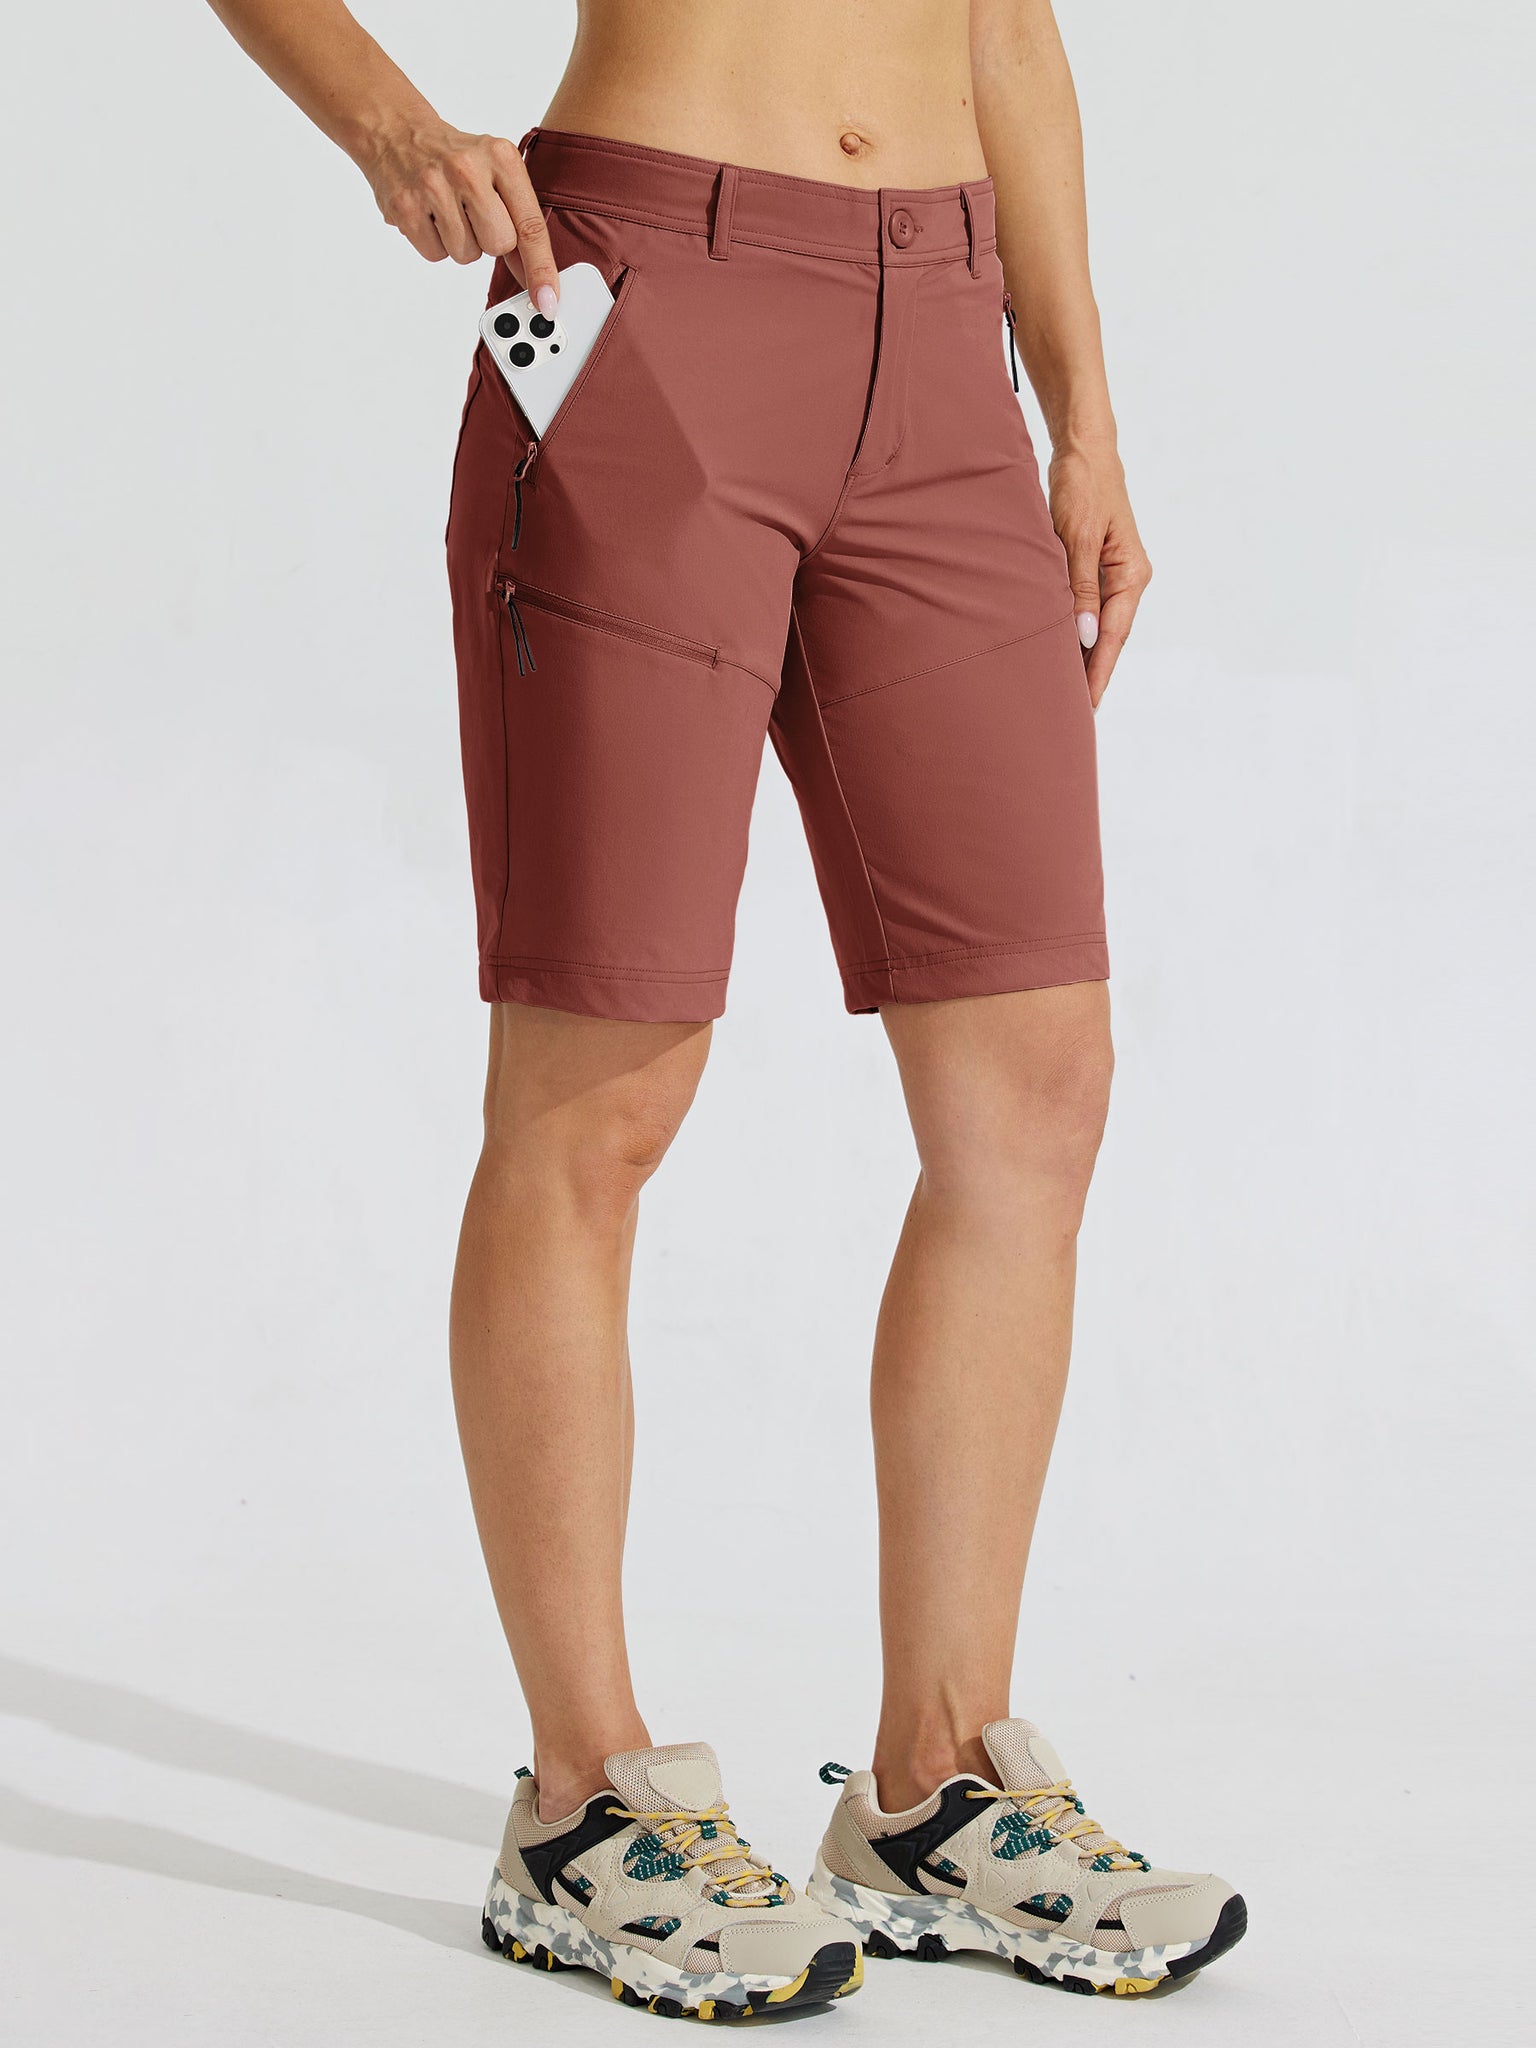 Women's Slim Leg Golf Shorts 10Inch_Cacao_model1